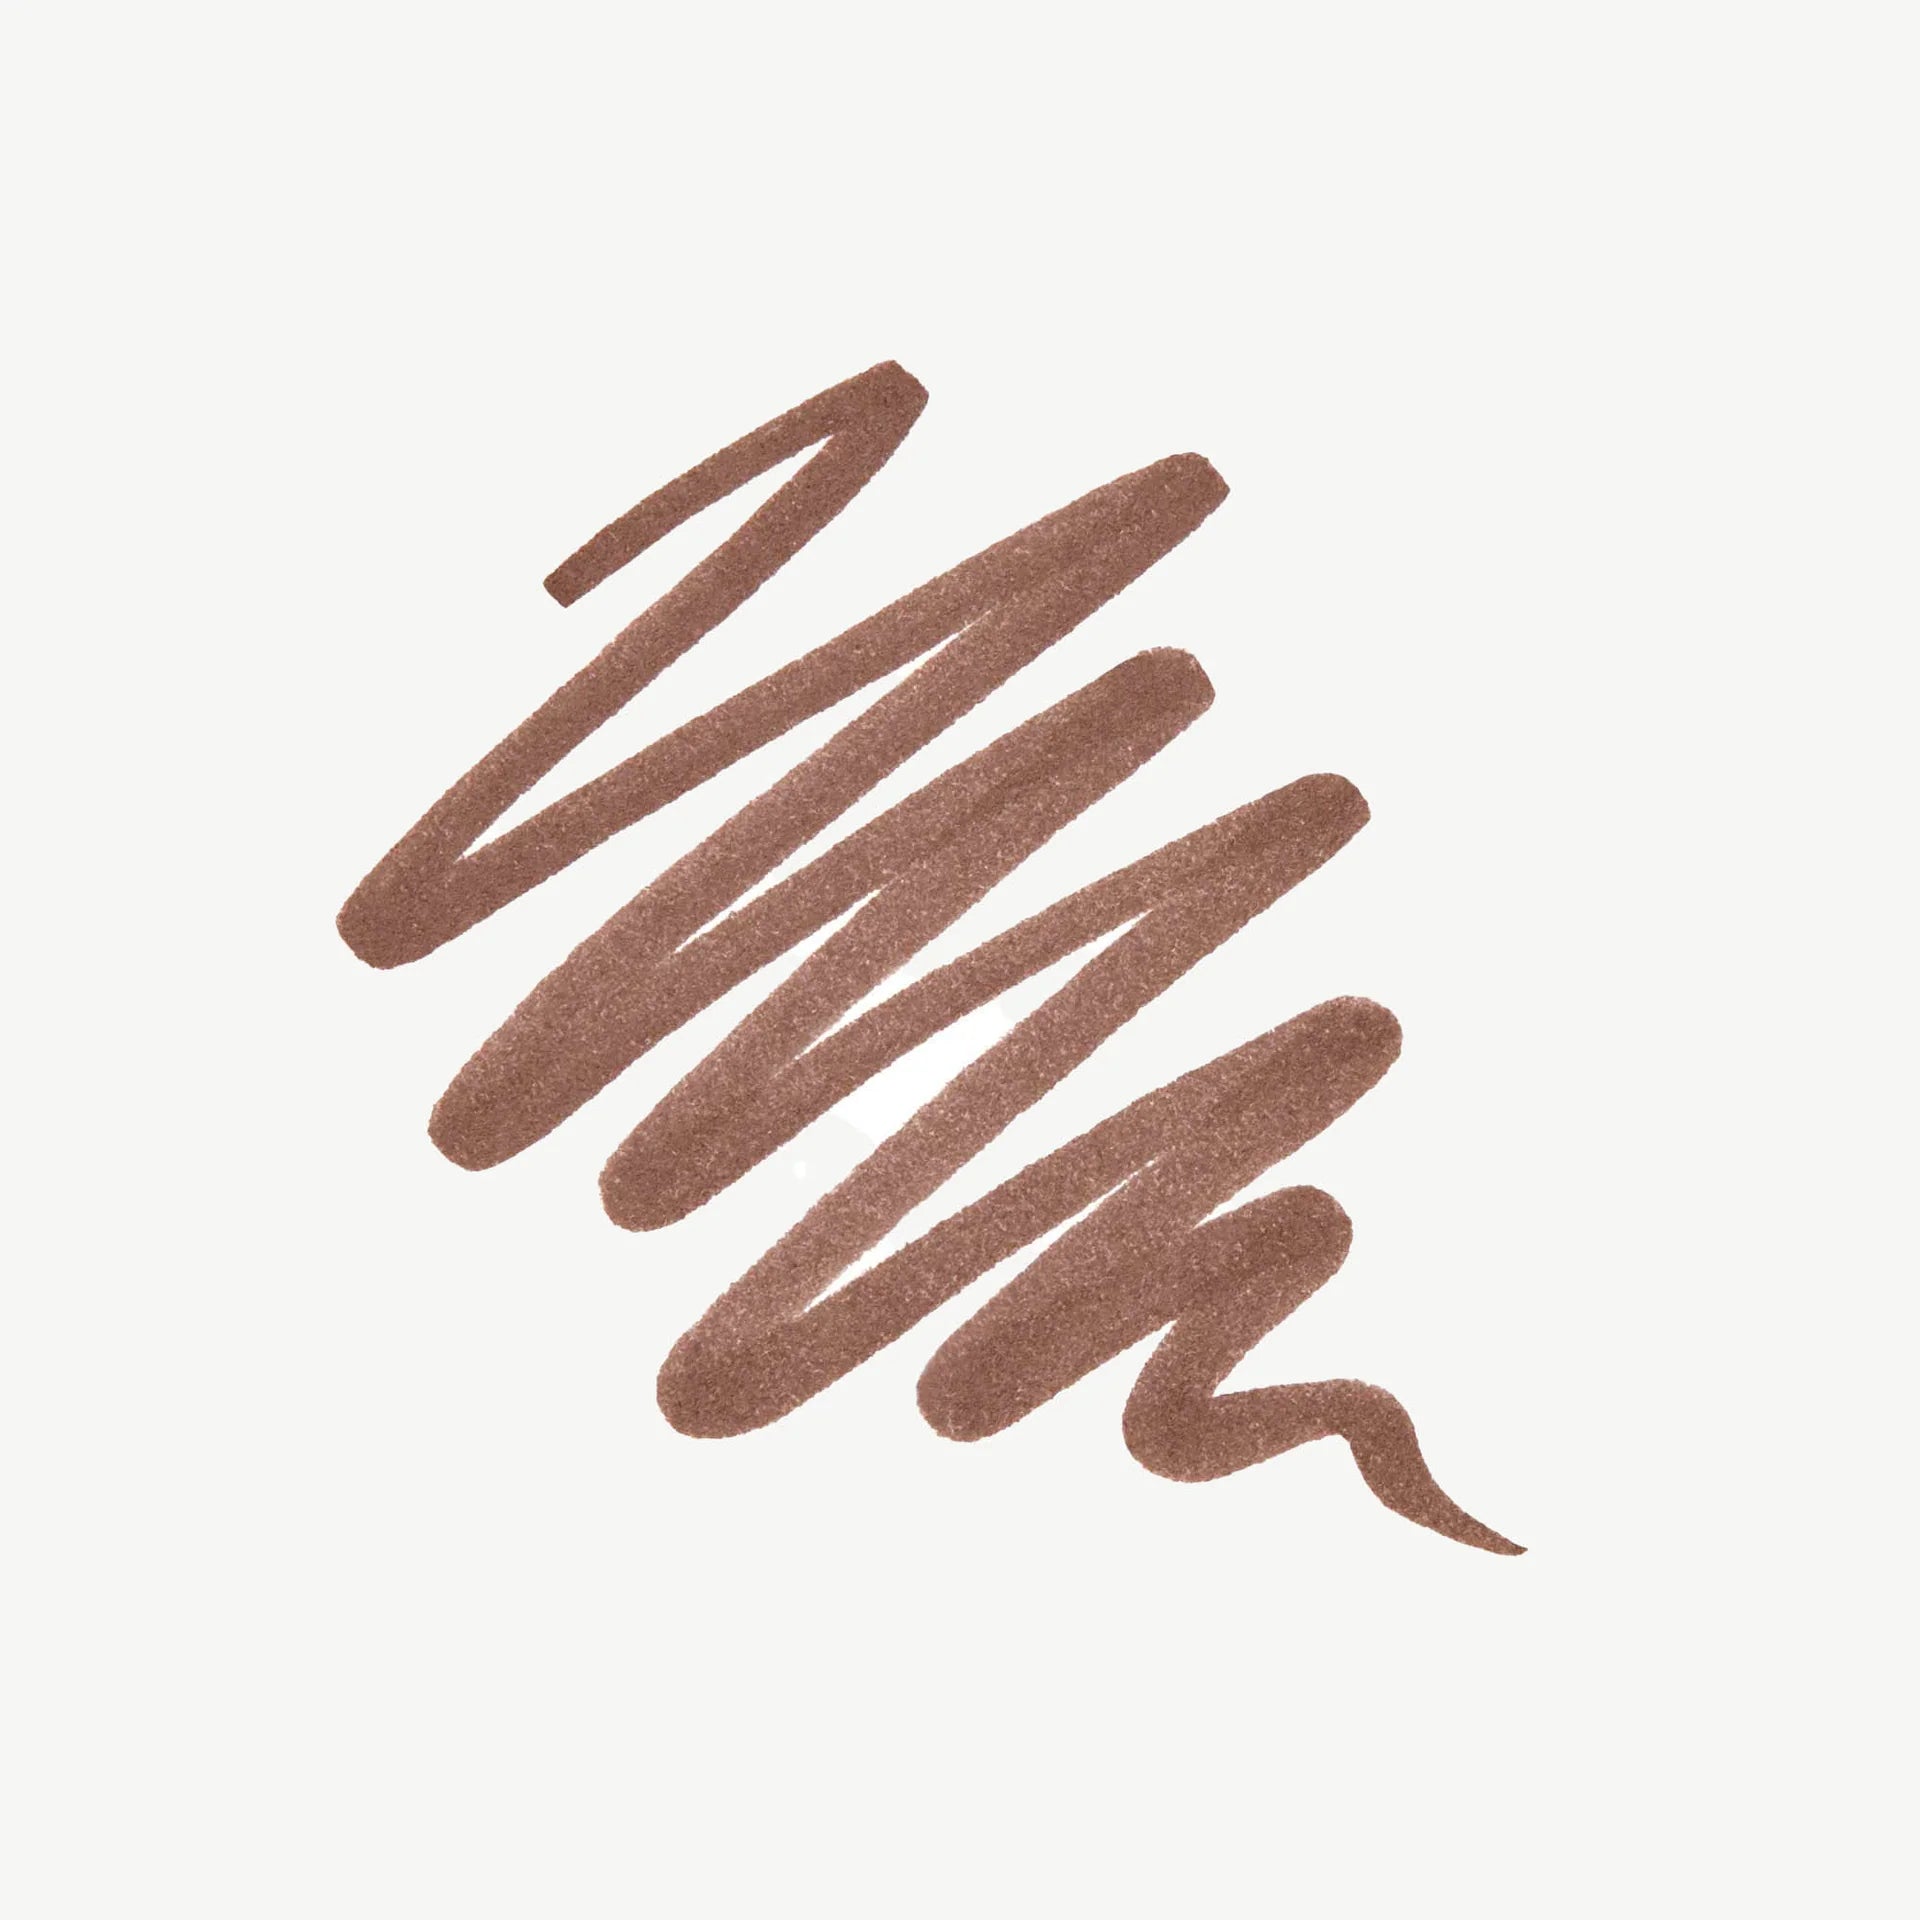 Chocolate |Brow Pen Swatch Shade Chocolate